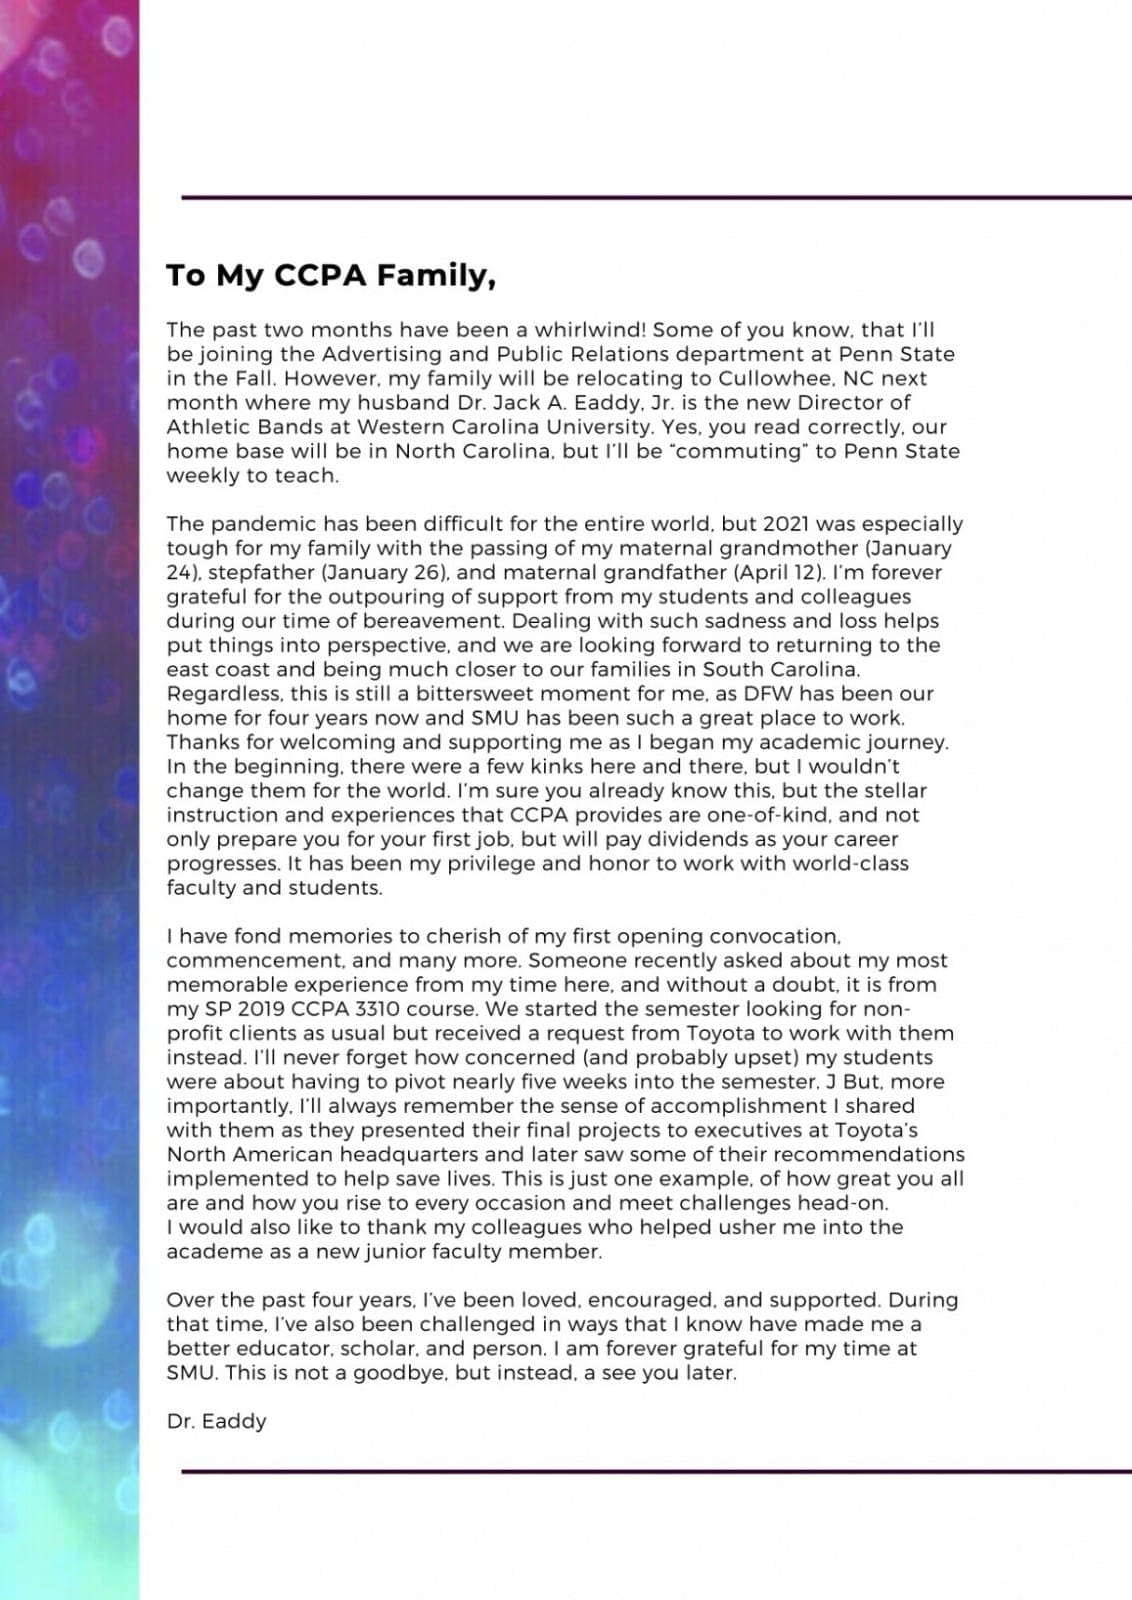 Professor Eaddy's Farewell Letter to CCPA